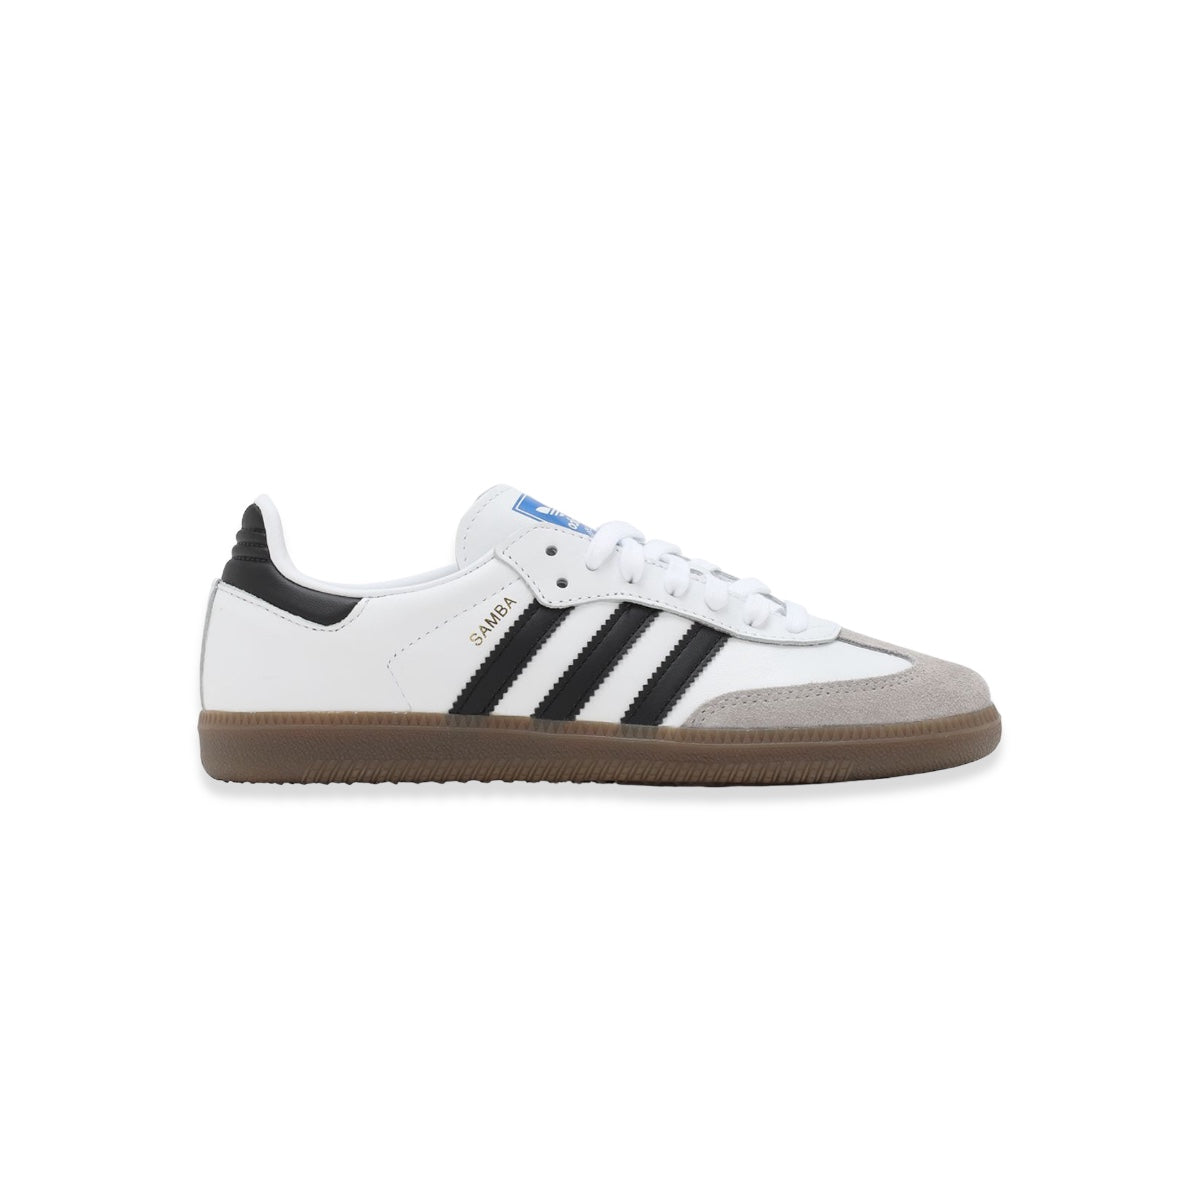 Adidas - Samba OG White Sneakers